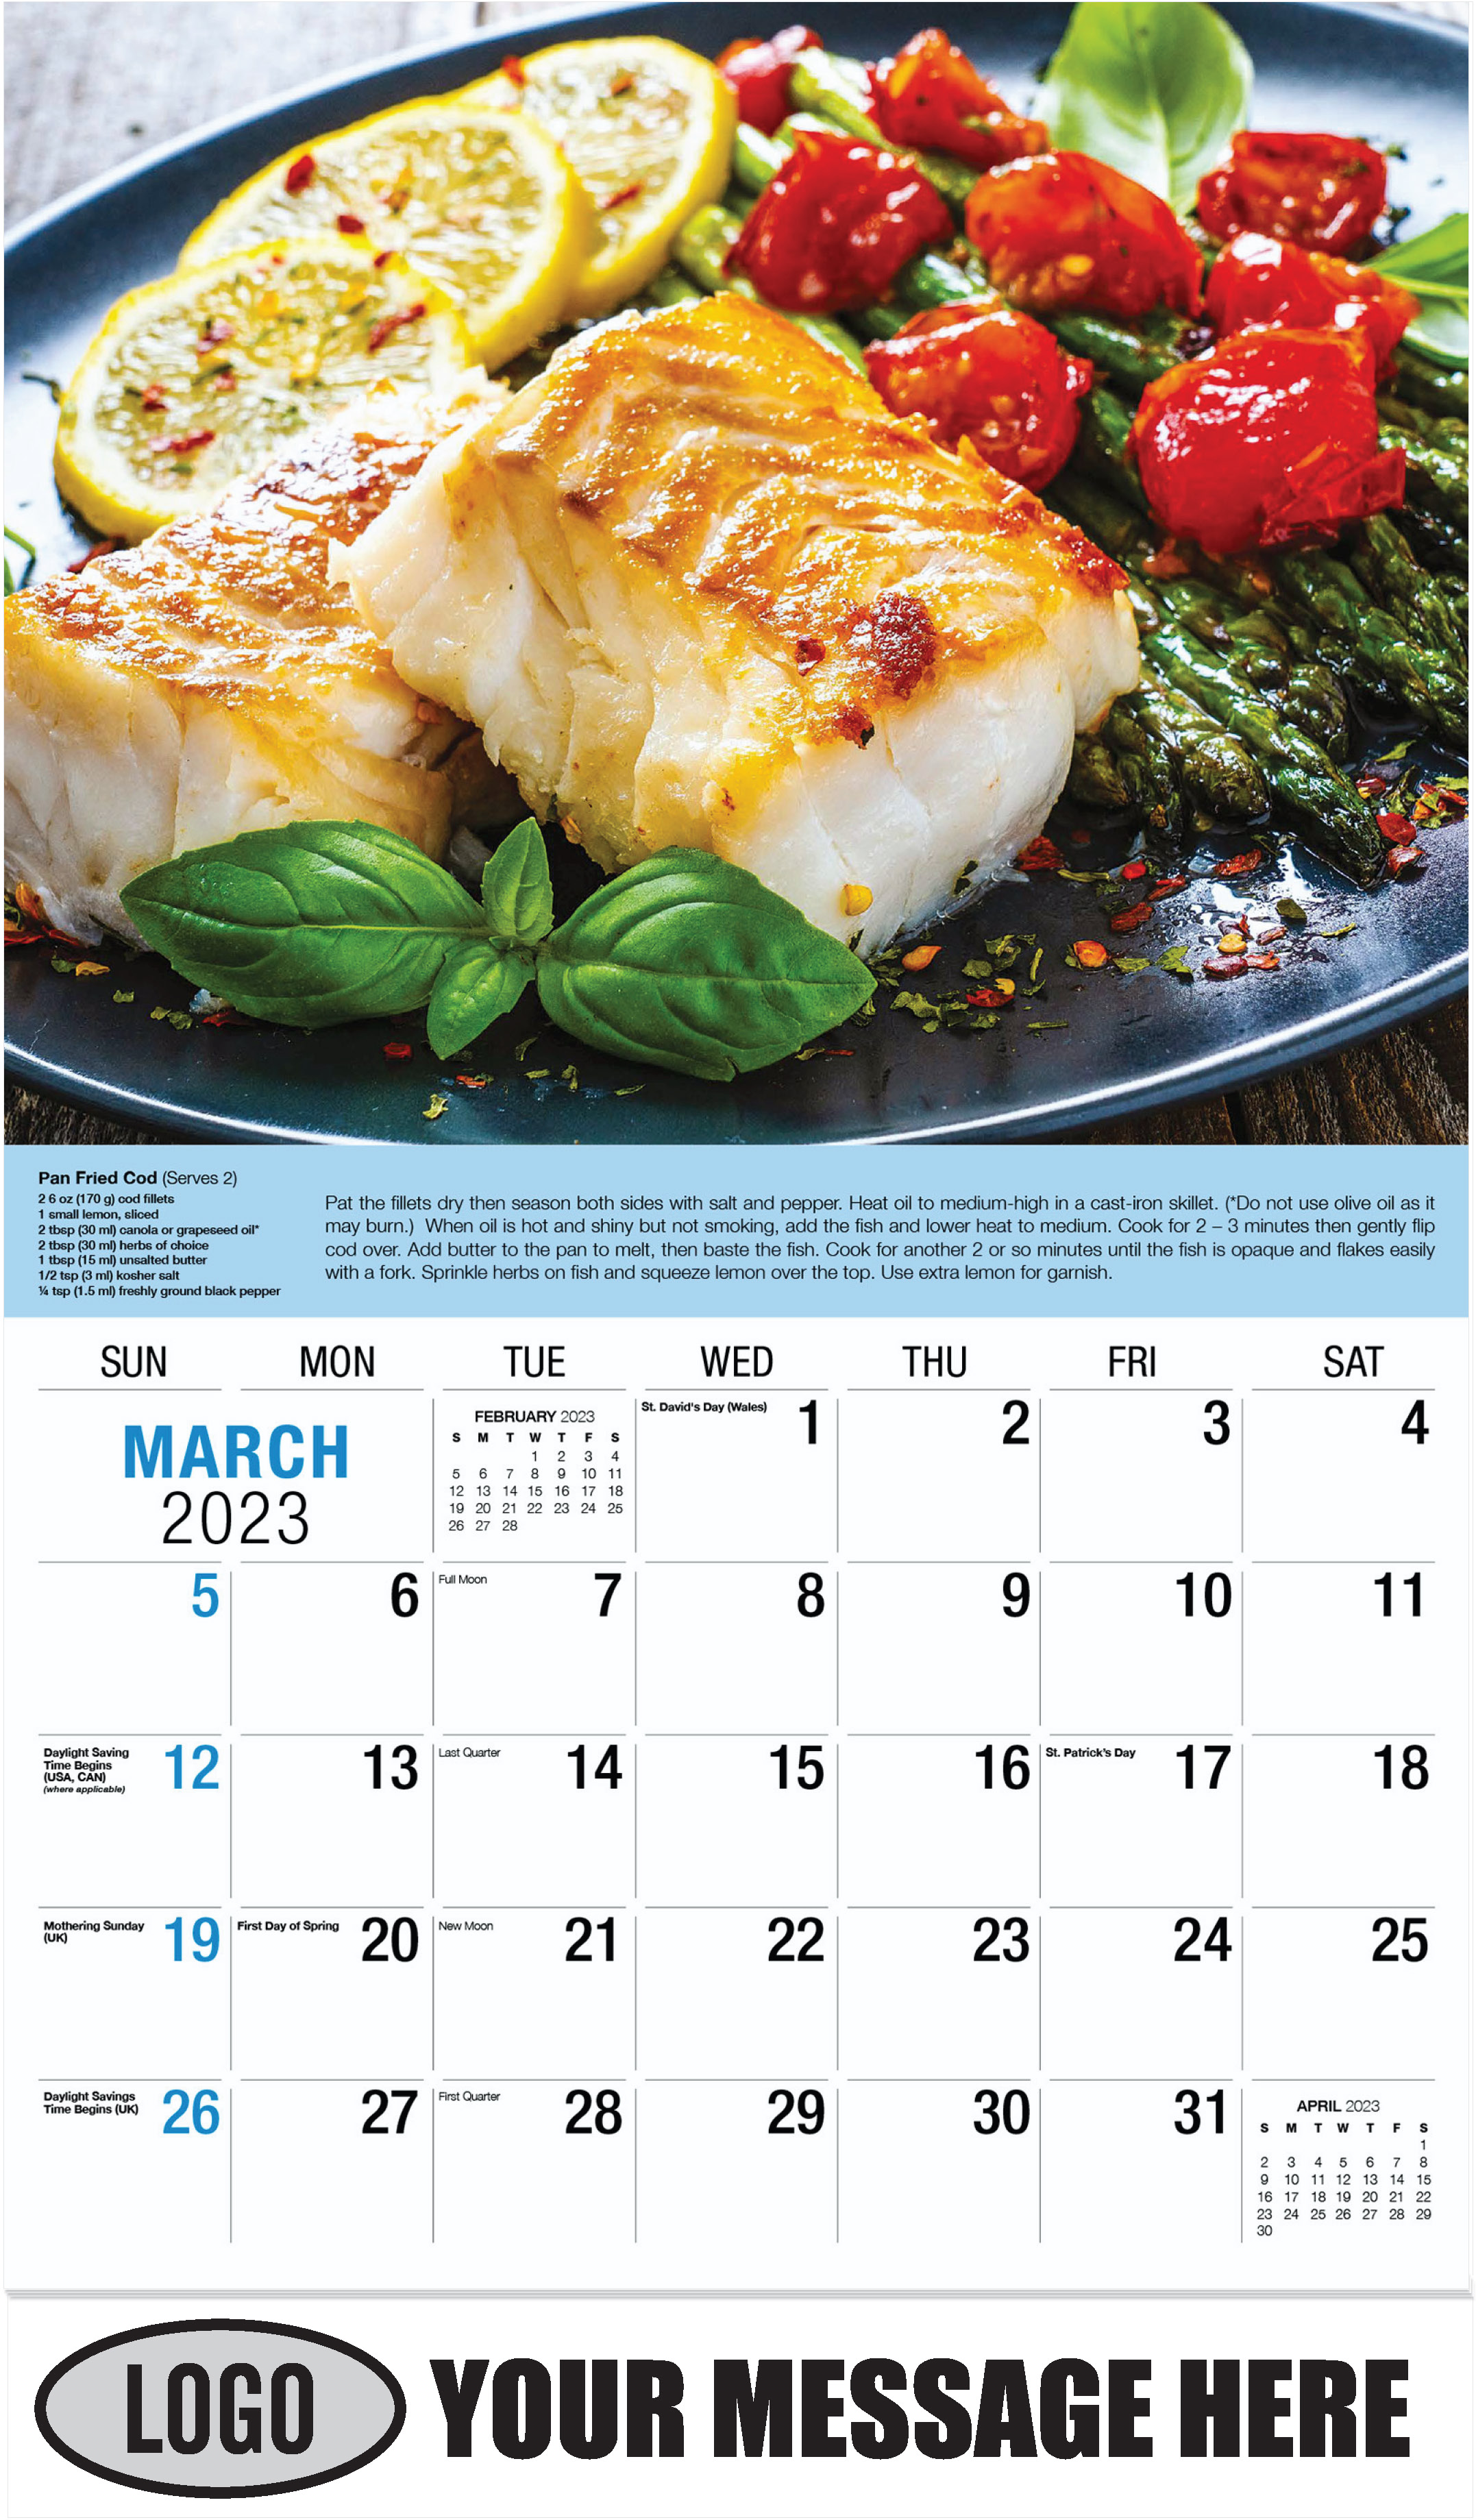 March - Recipes 2023 Promotional Calendar